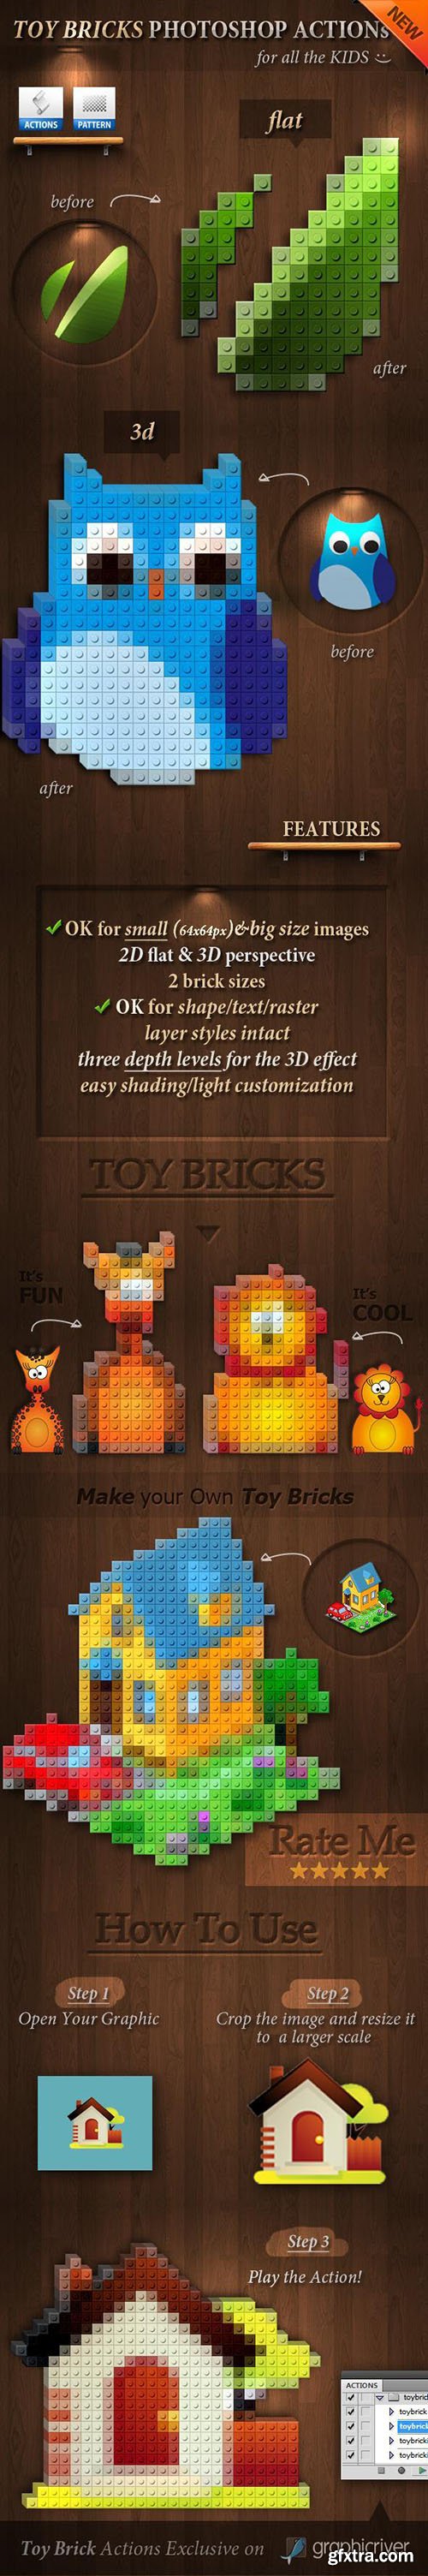 GraphicRiver 3D Toy Bricks Photoshop Actions 3924994